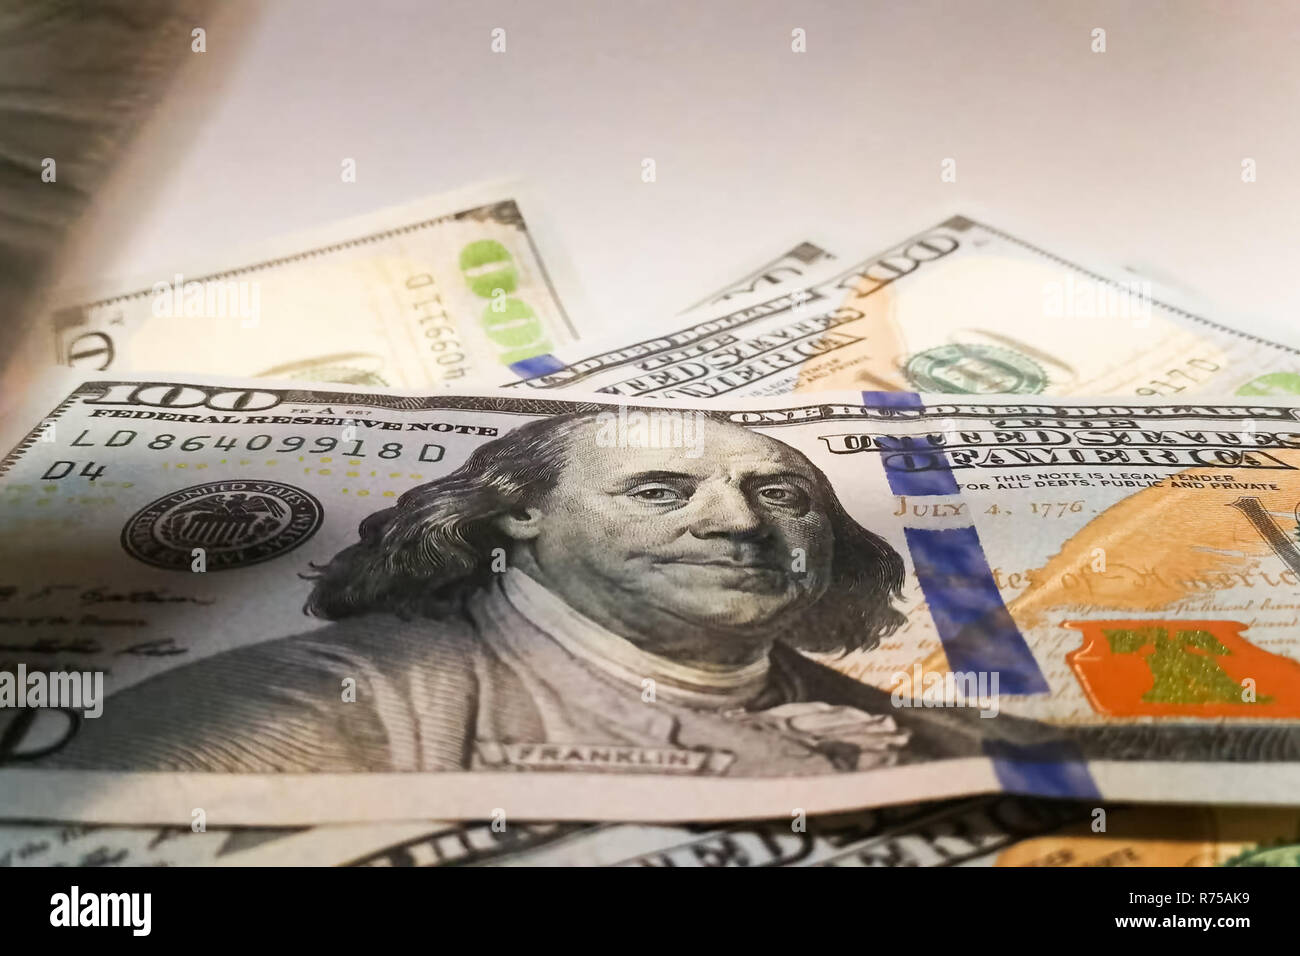 American dollars. Money banknotes. Bill of money dollar bills Stock Photo